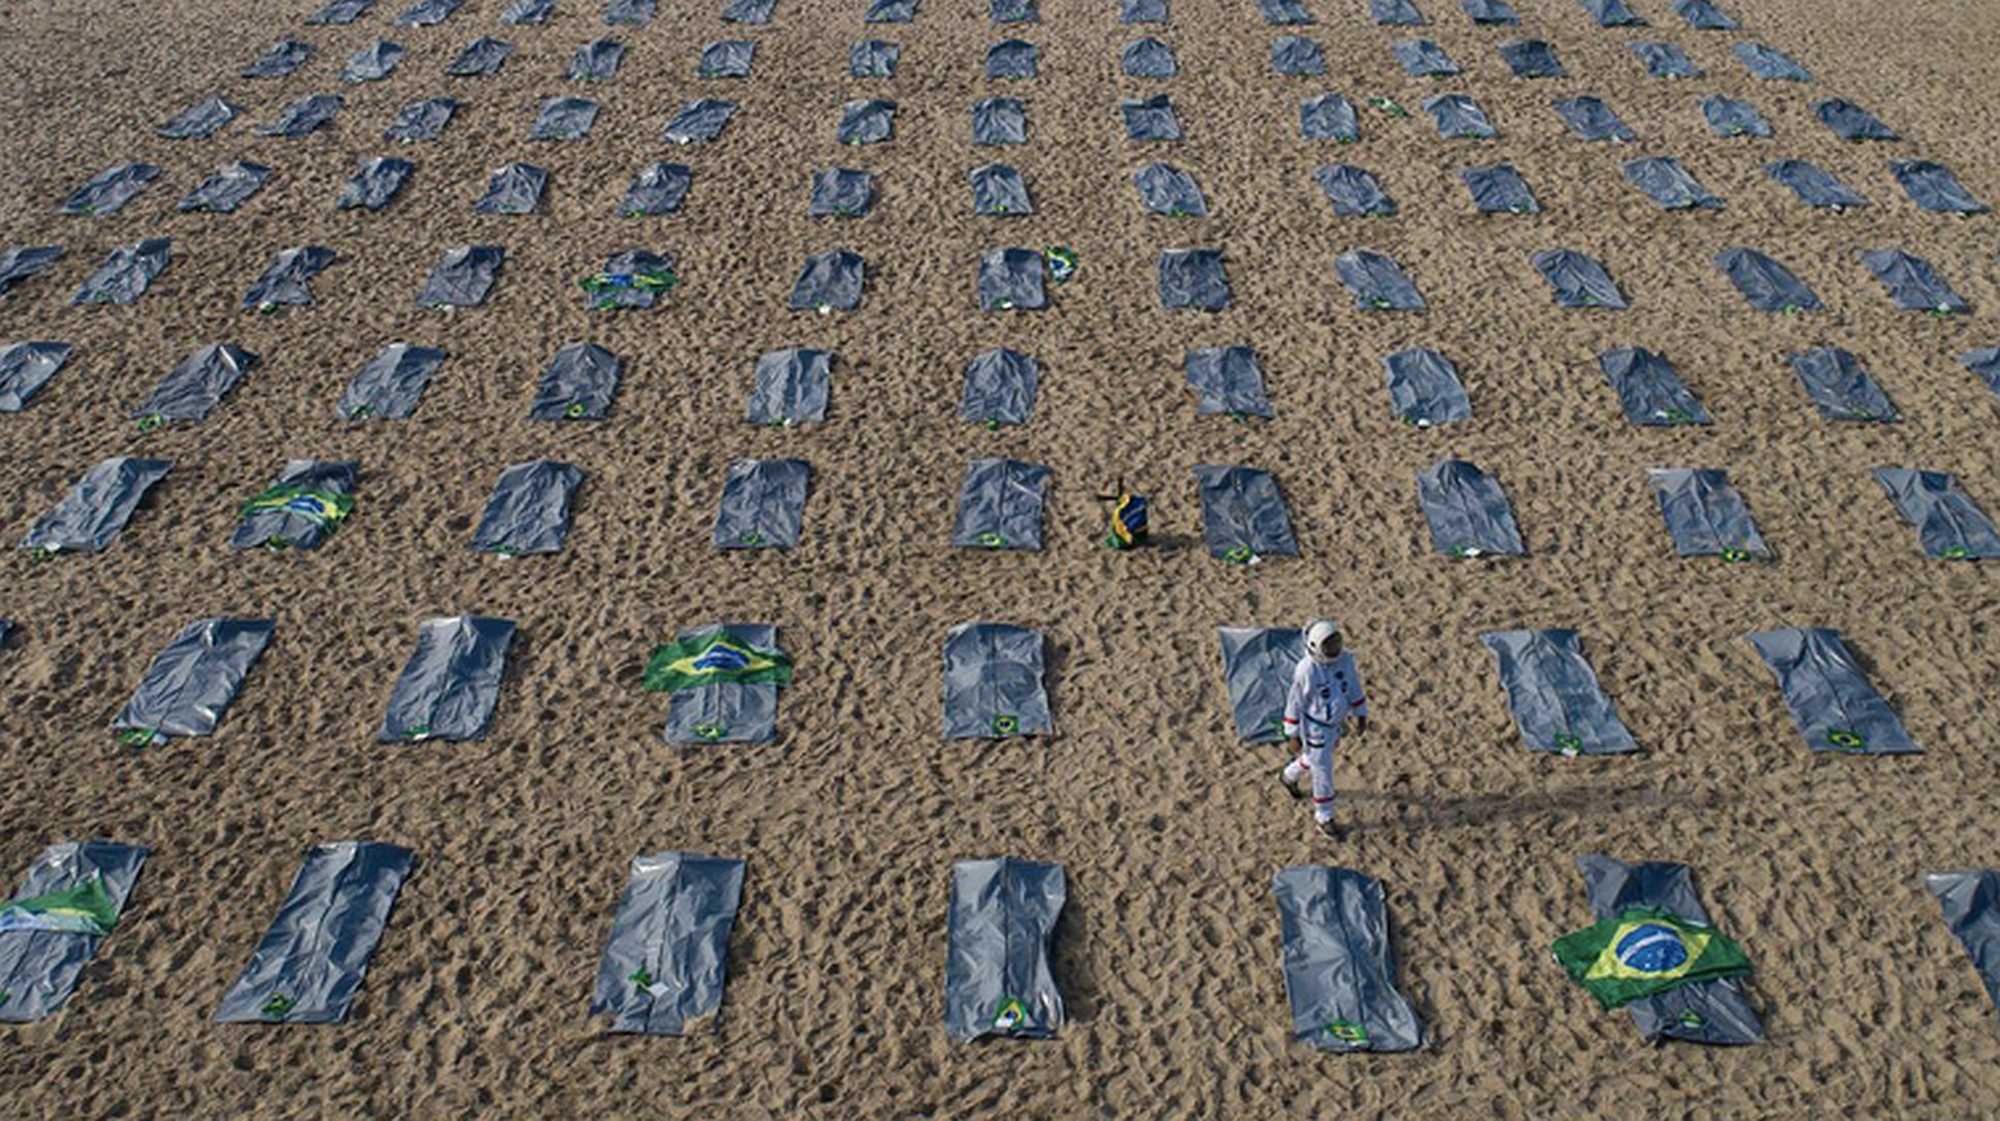 Body bags on Rio's Copacabana beach symbolize the victims of the pandemic. -Fernando Souza/dpa/Alamy